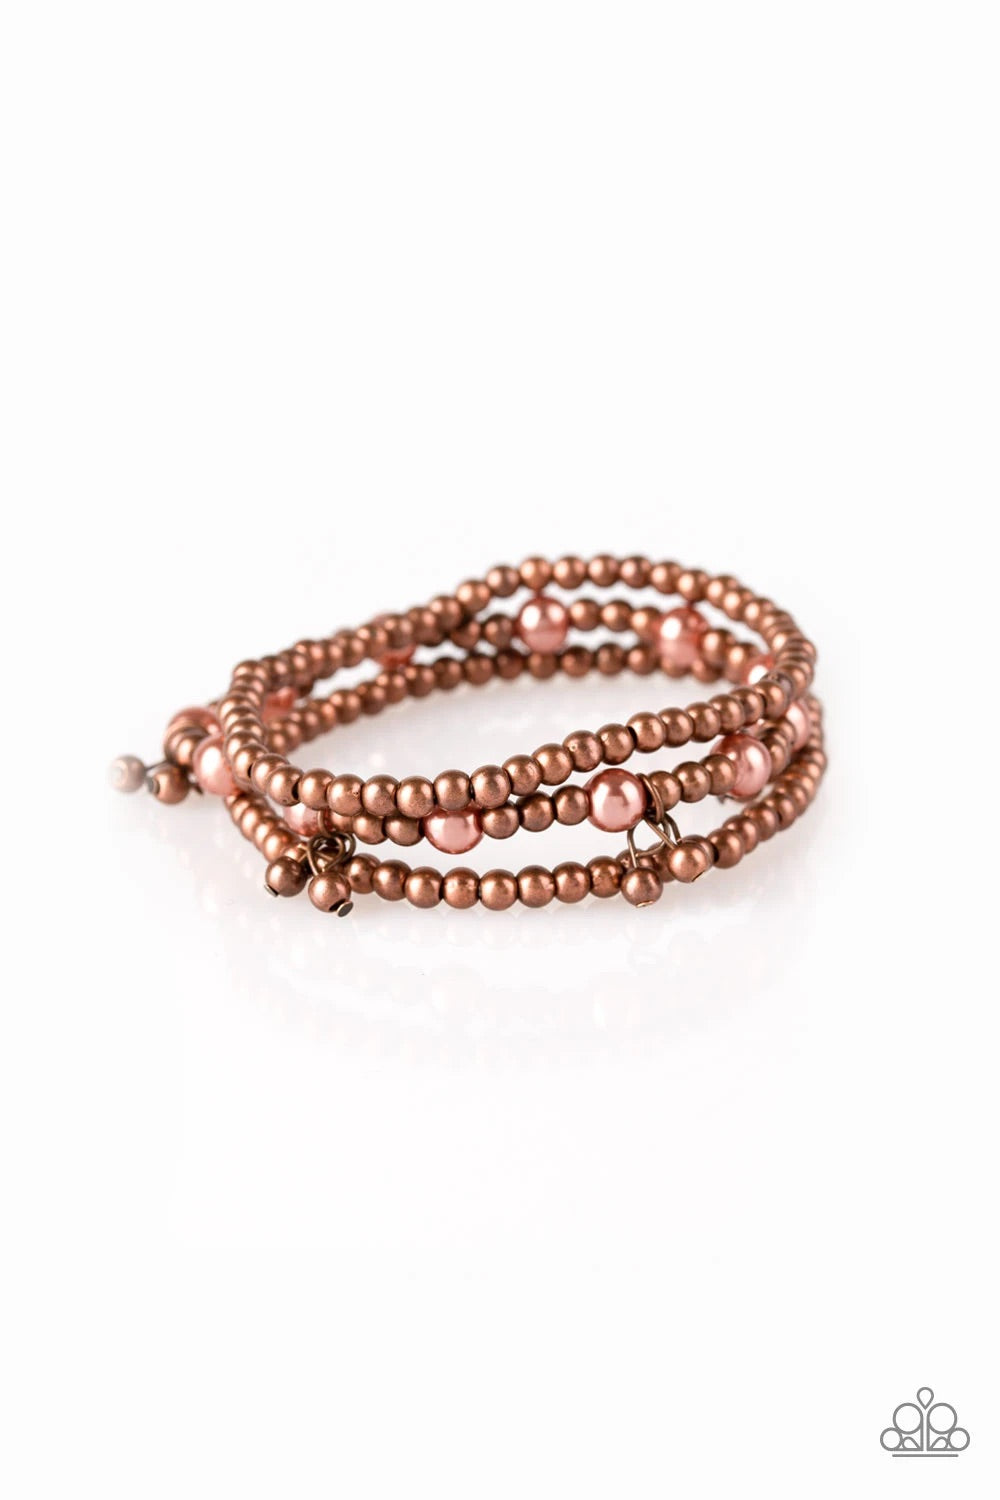 GRANDIOSE Slam Copper Bracelet freeshipping - JewLz4u Gemstone Gallery